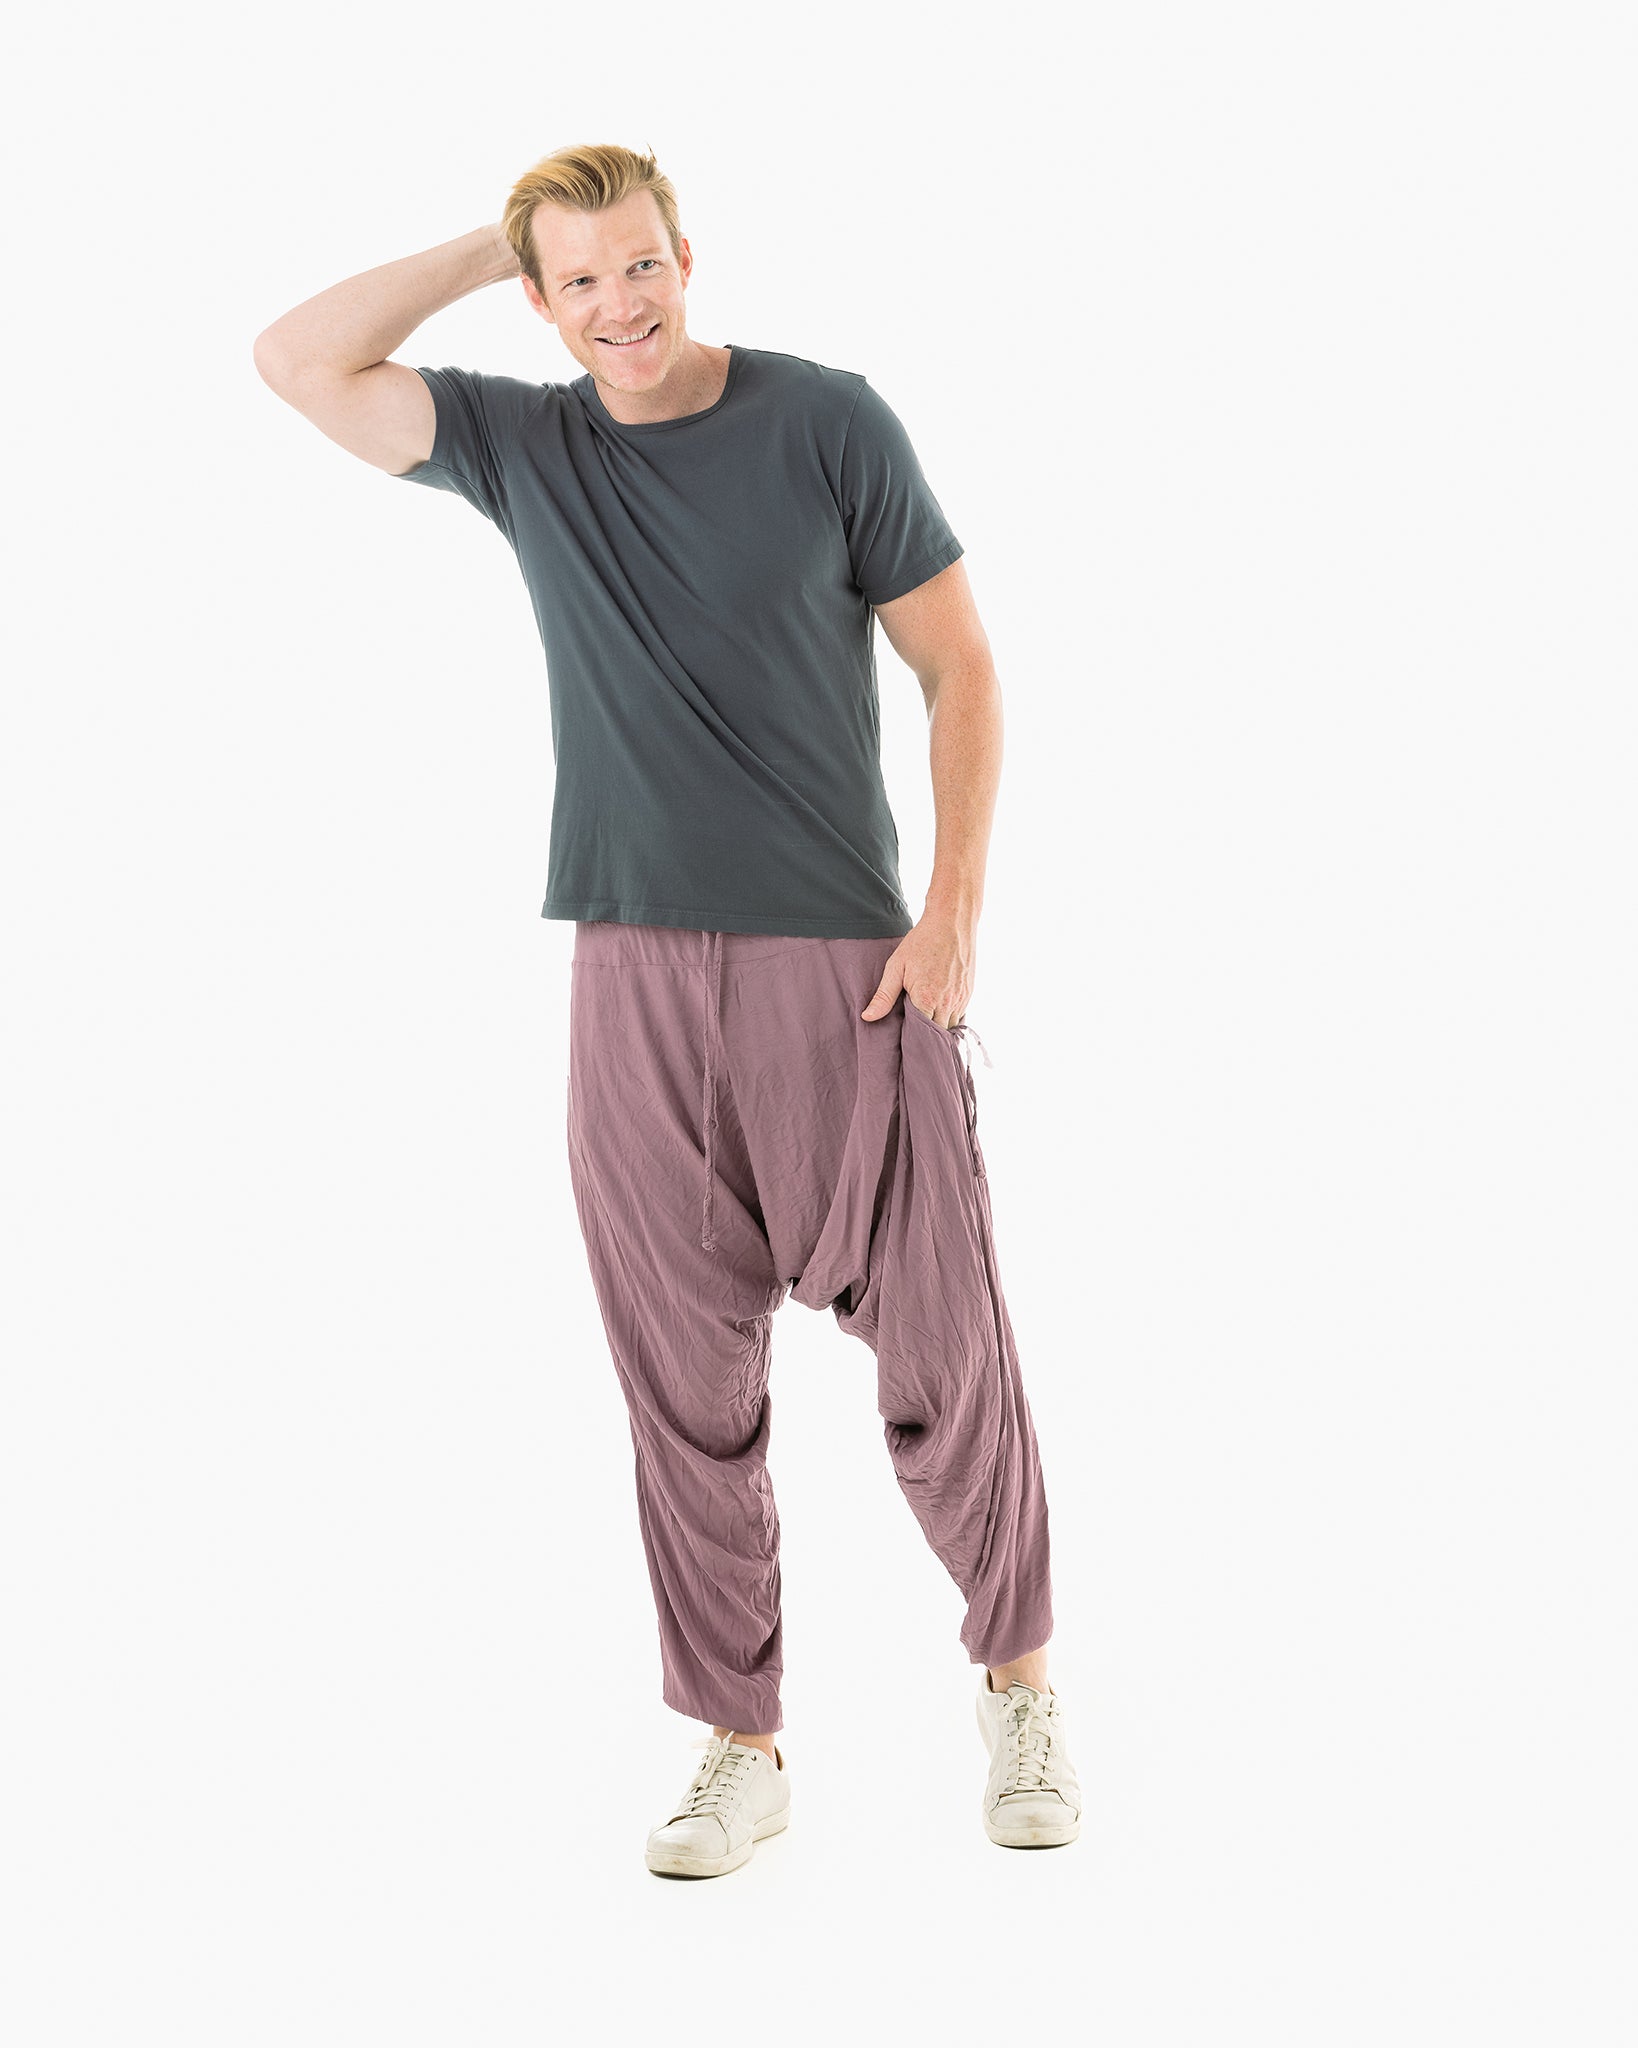 MC Hammer Pants - Unisex Yoga Pants